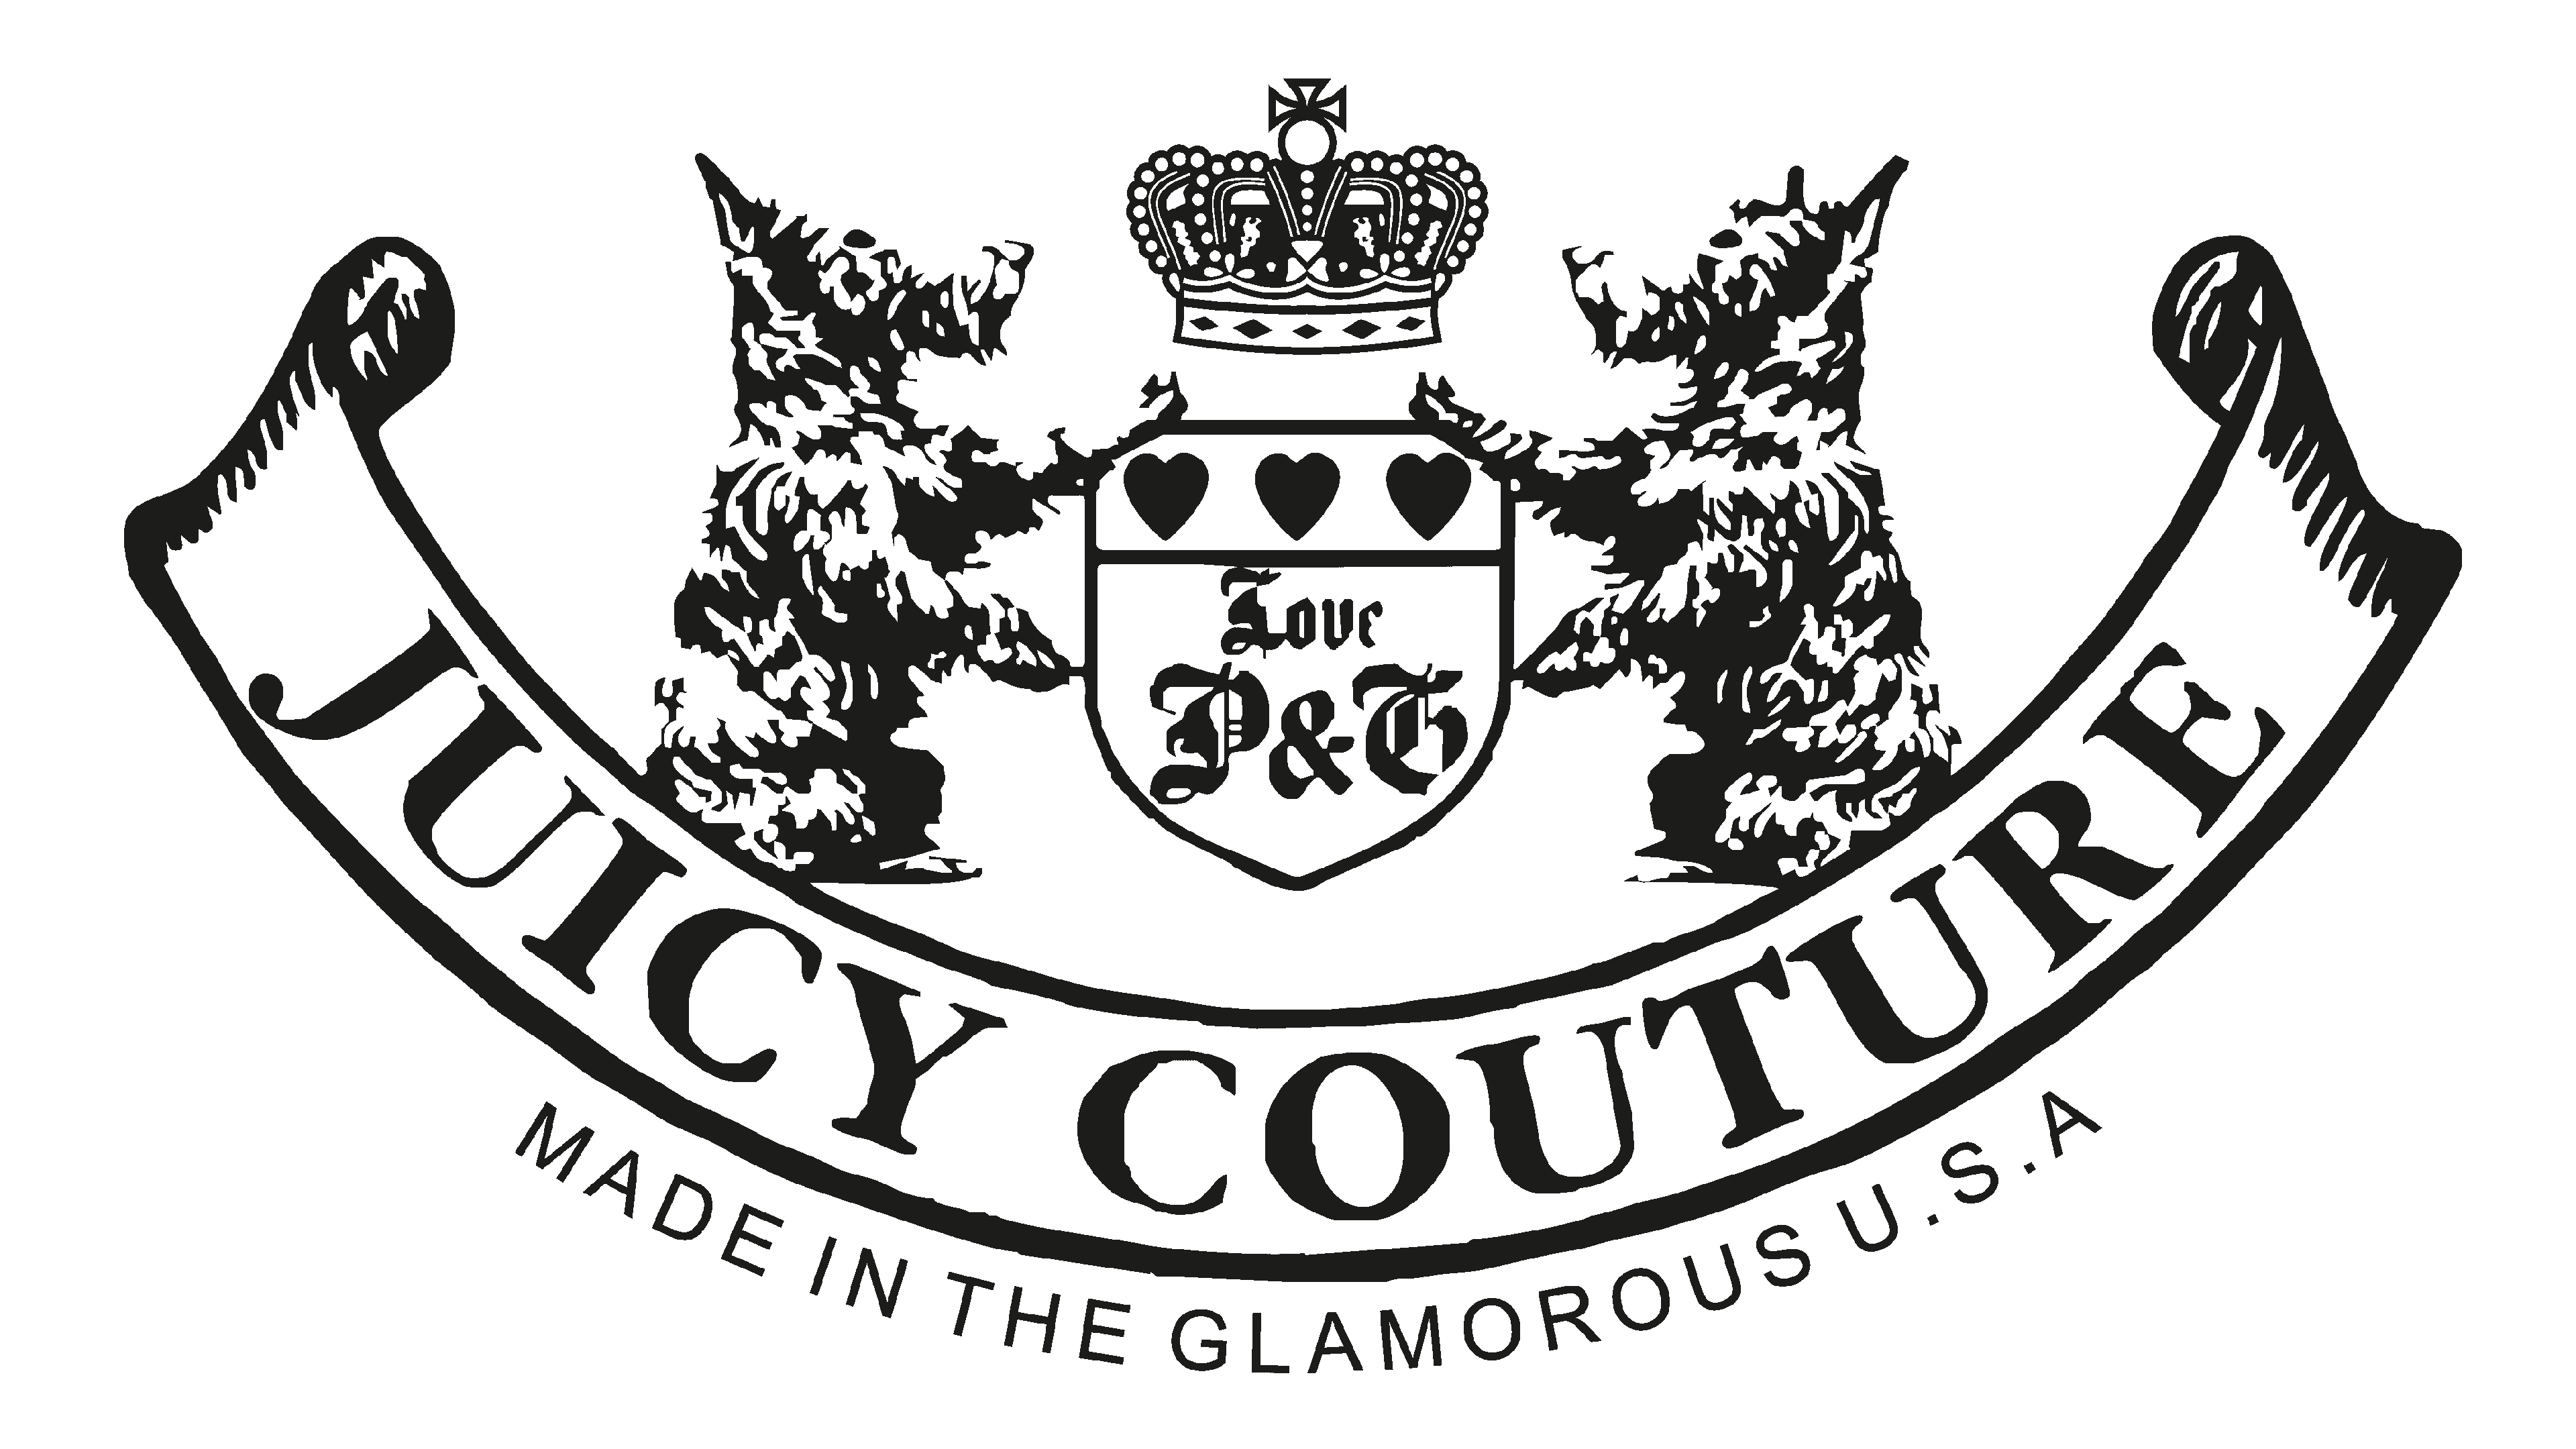 skliznuti Otpad Čestitamo logo juicy couture Ljubazni Mover Mesec